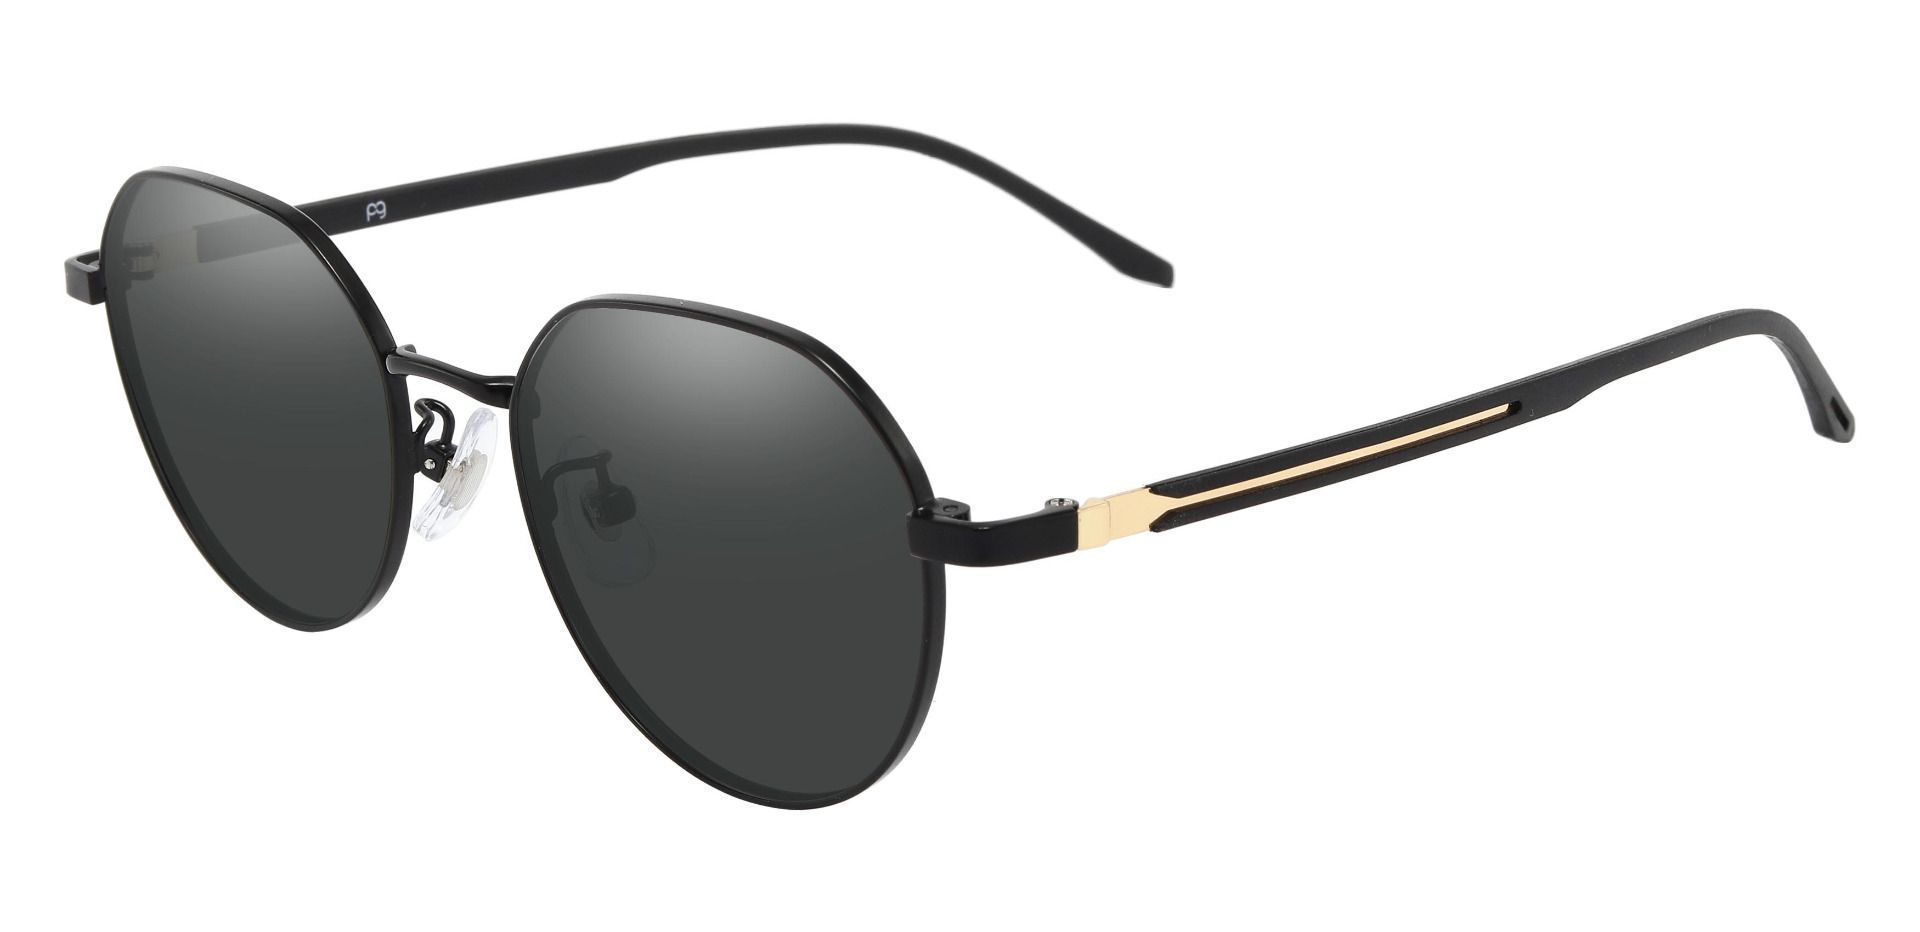 Beatrice Geometric Prescription Sunglasses - Black Frame With Gray Lenses